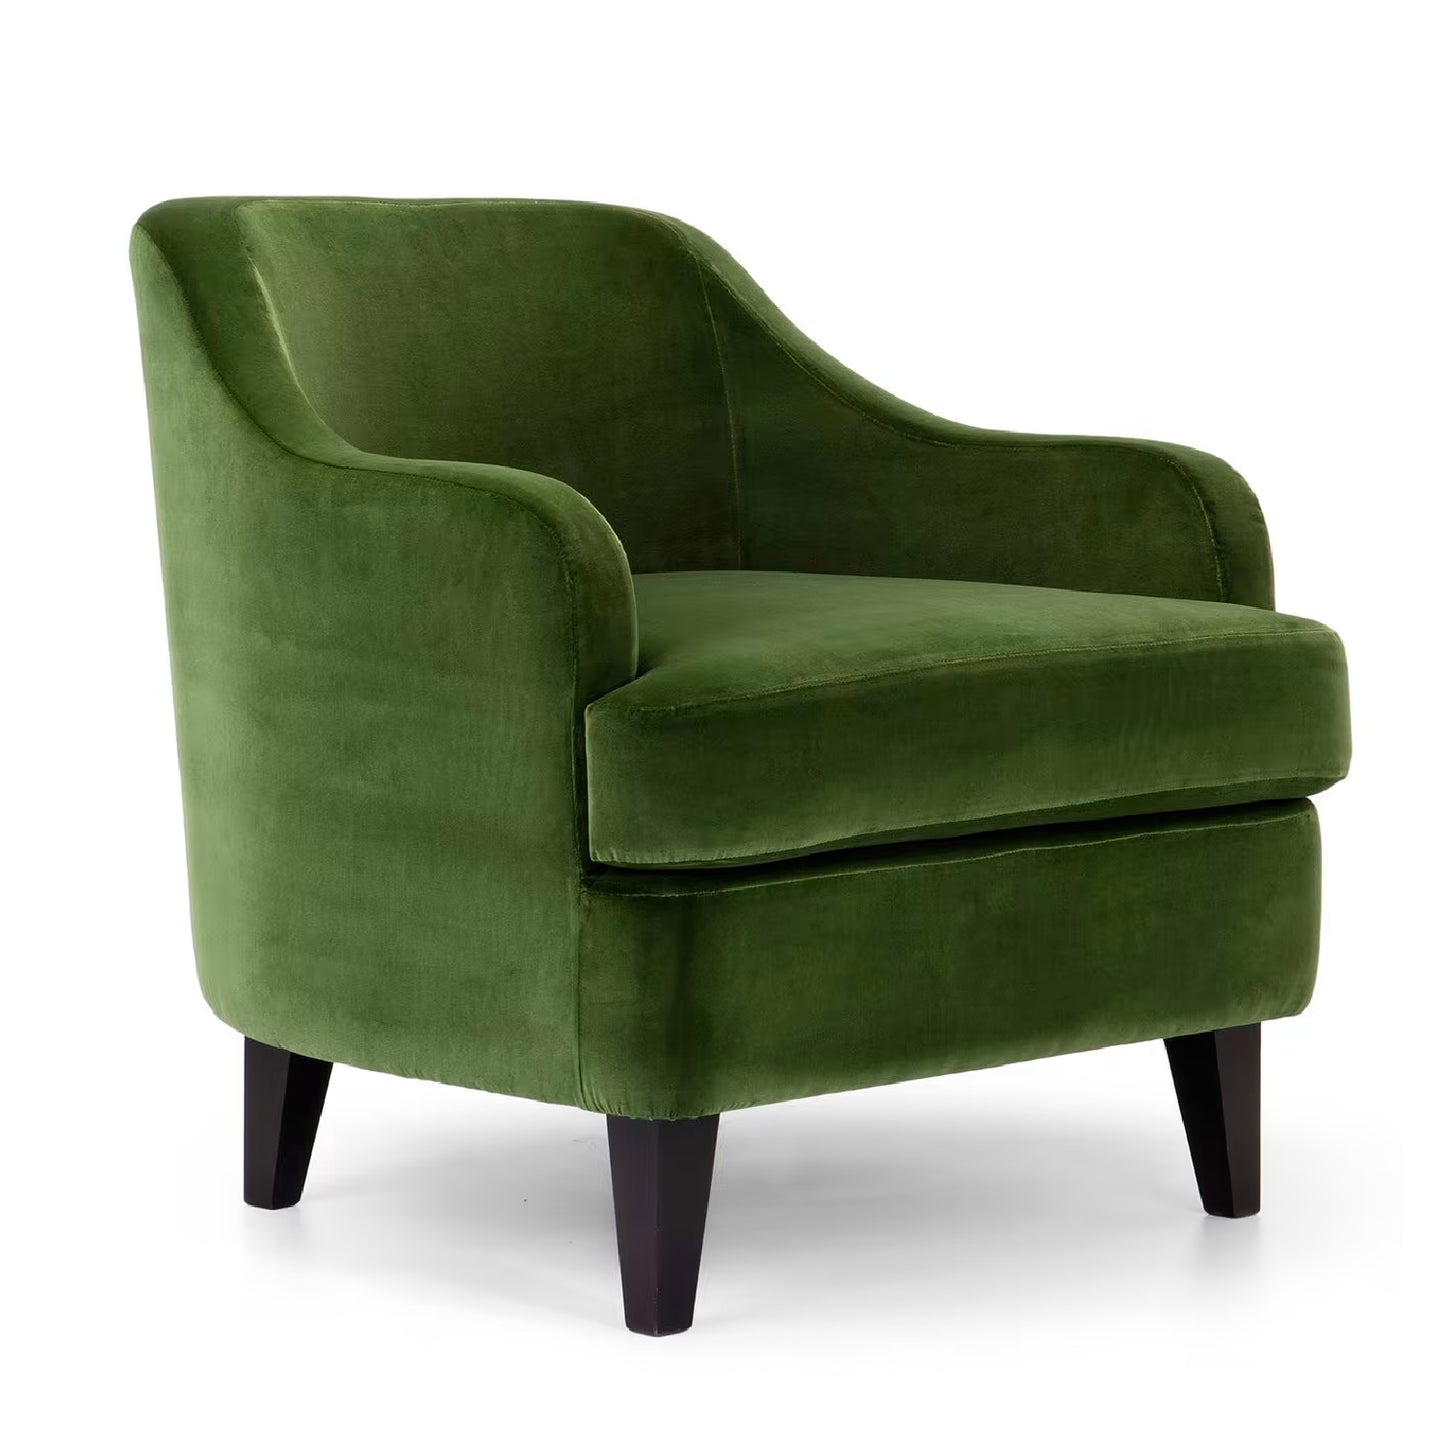 Nor Green Armchair by Domingo Salotti